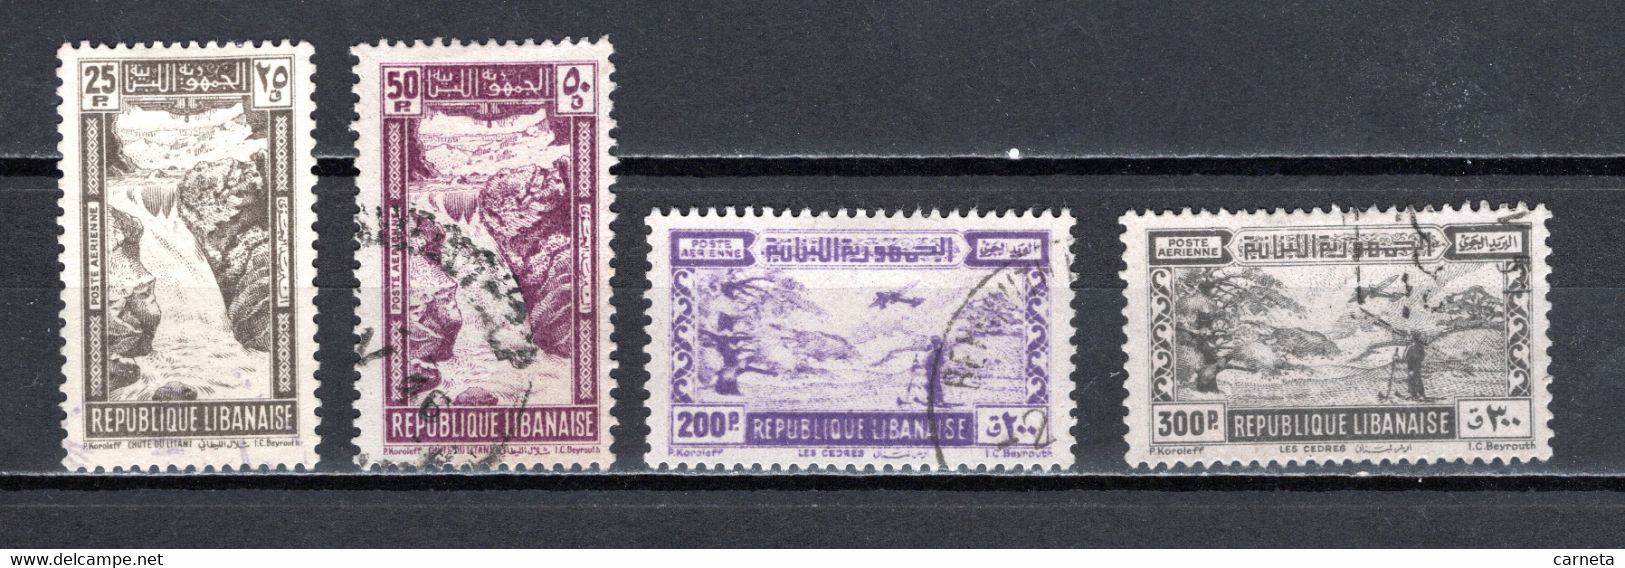 GRAND LIBAN  PA  N° 98 à 100  OBLITERES   COTE 23.50€    TOURISME CHUTE D'EAU SKI PAYSAGE AVION - Used Stamps